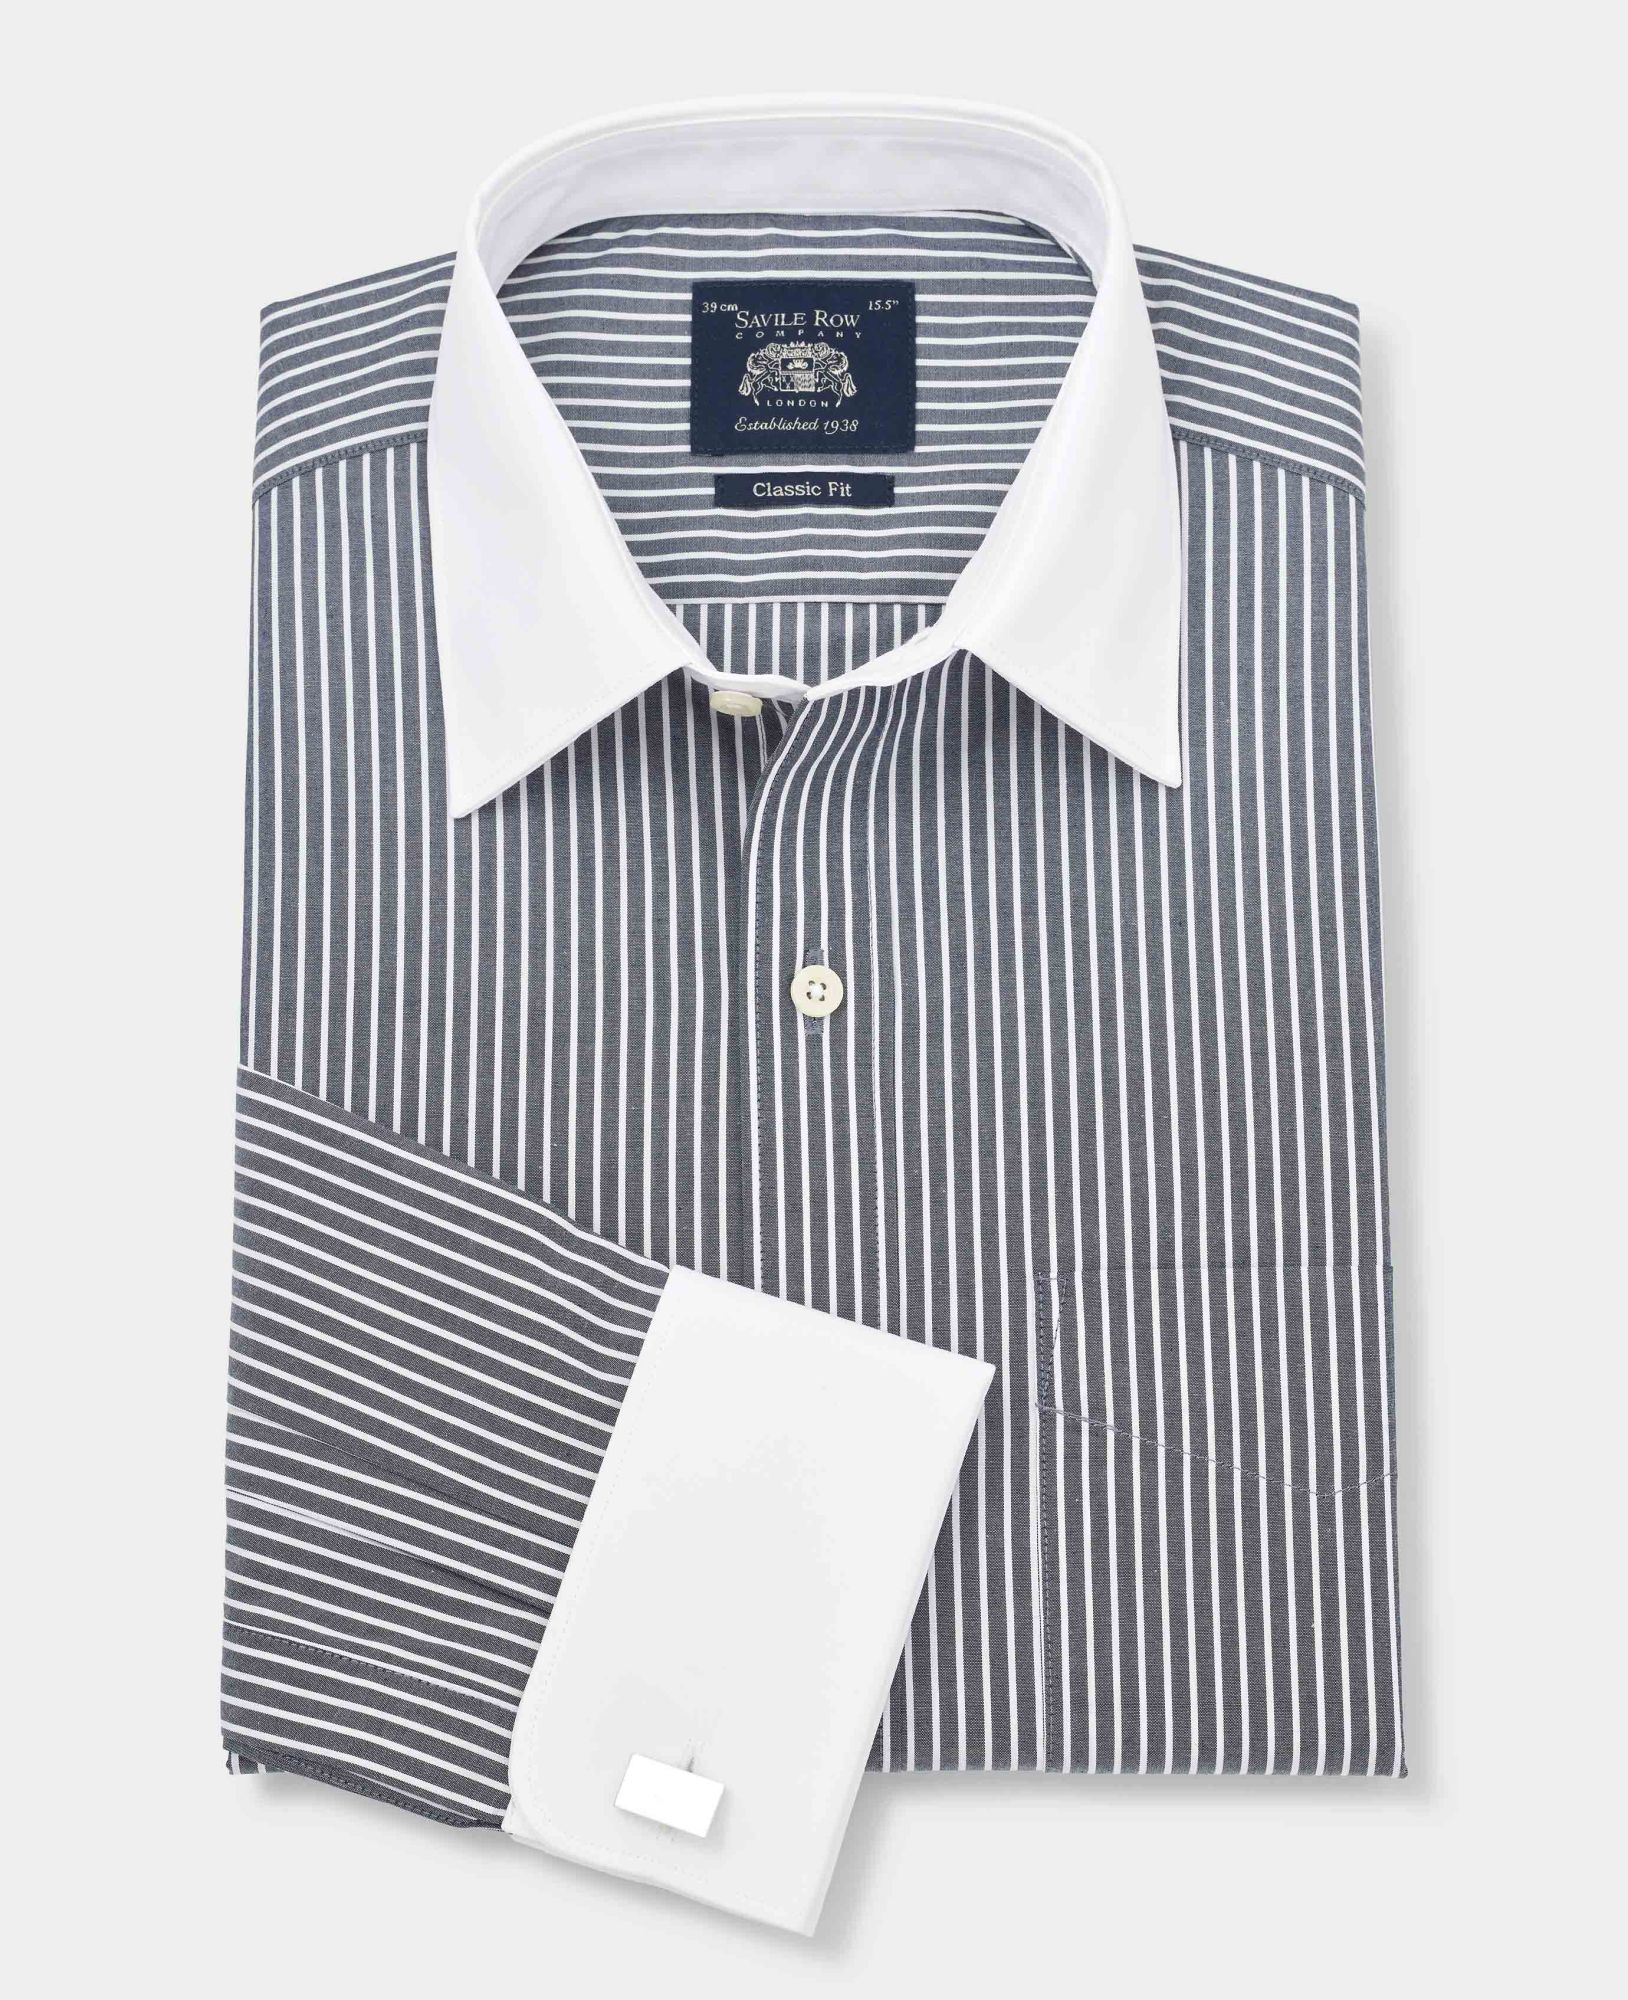 Black White Stripe Classic Fit Shirt With White Collar & Cuffs - Double Cuff 17